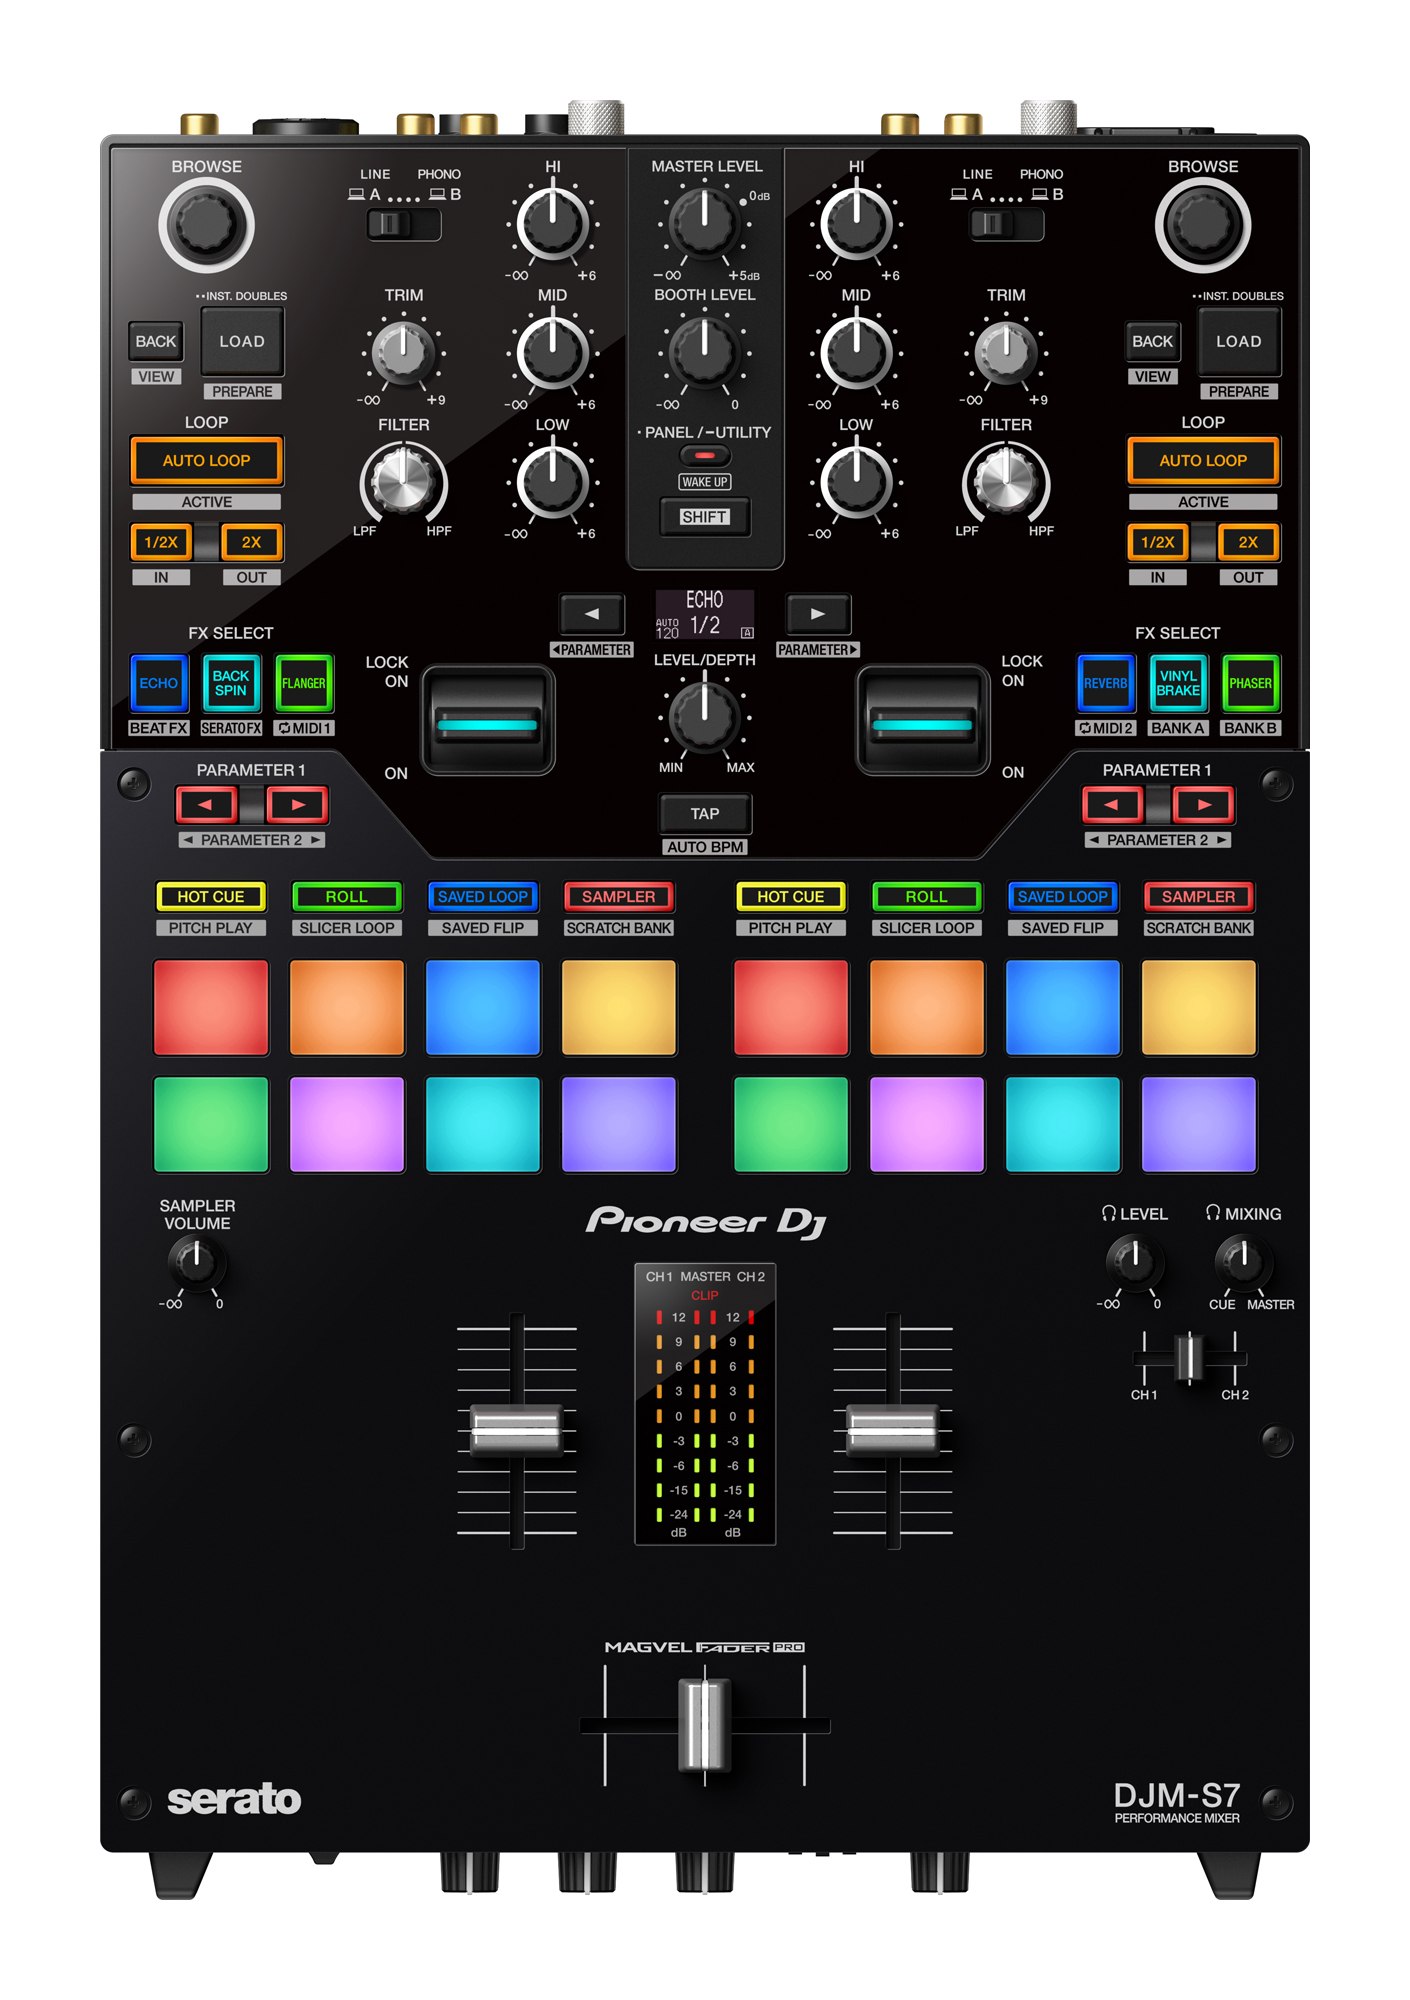 DJM-S7 2-Channel, Scratch Style, Battle, Bluetooth-Enabled DJ Mixer